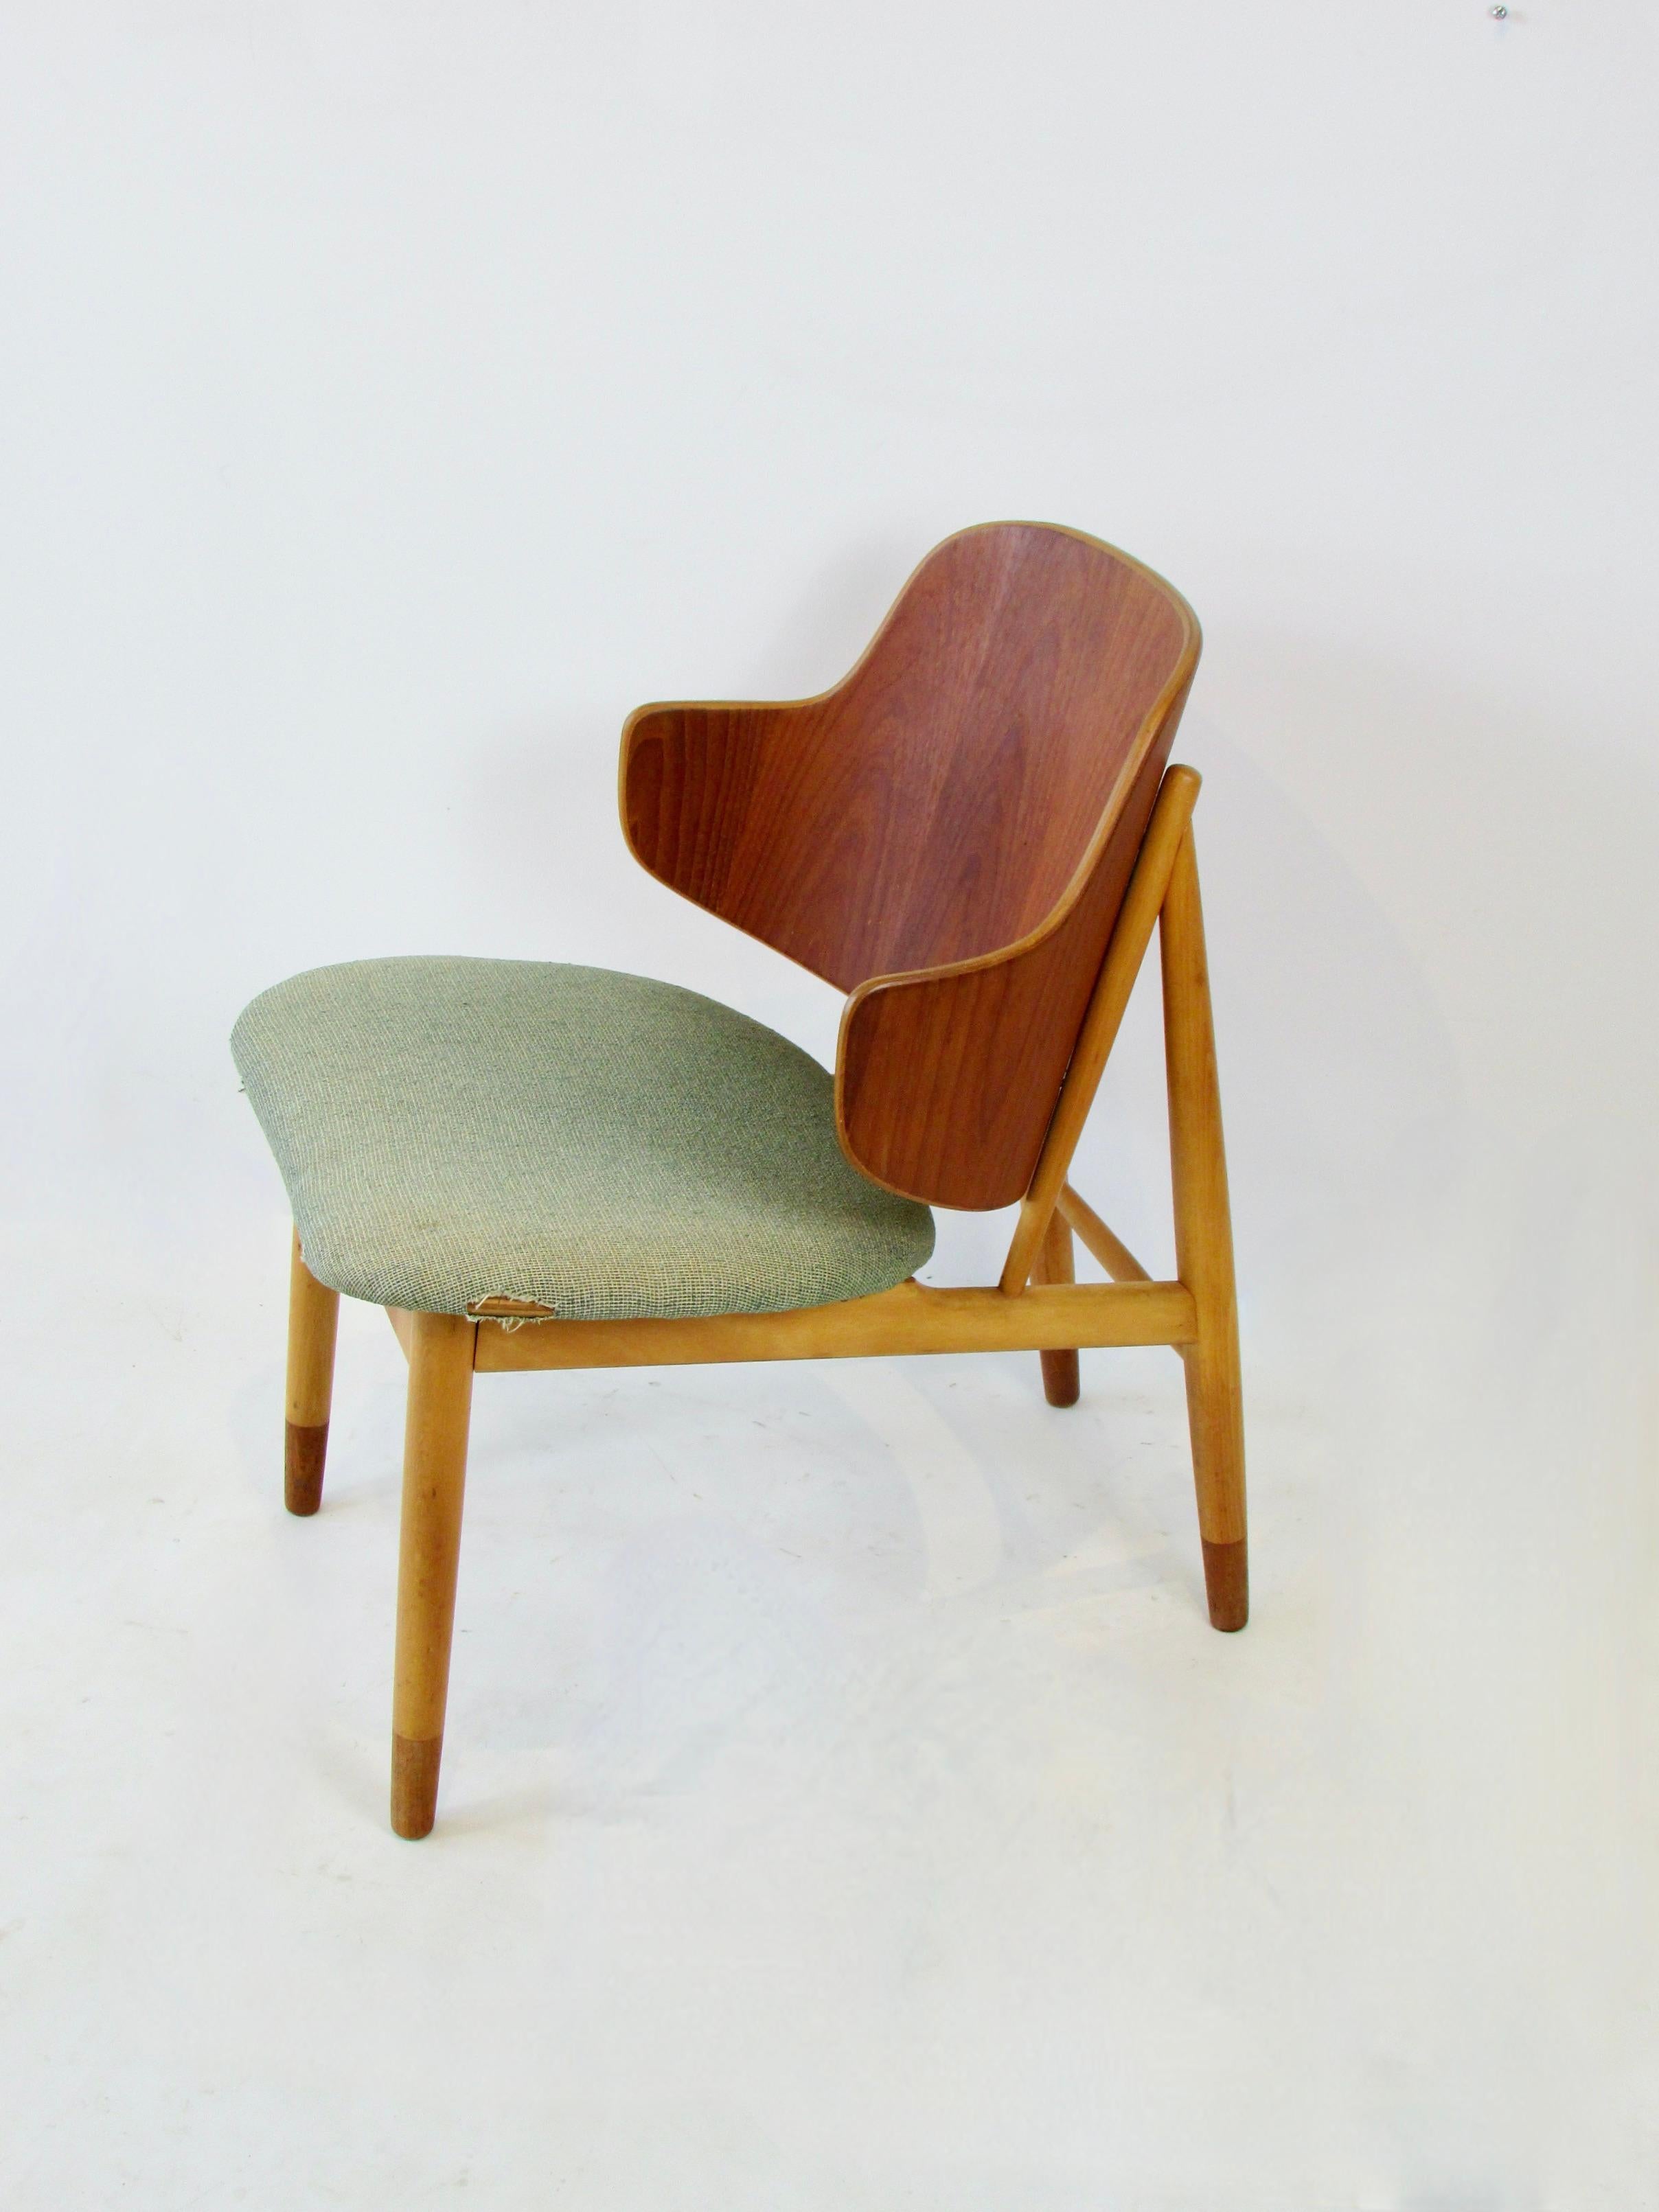 Hand-Crafted Ib Kofod-Larsen Penguin chair for Christiansen and Larsen Denmark 1955 For Sale